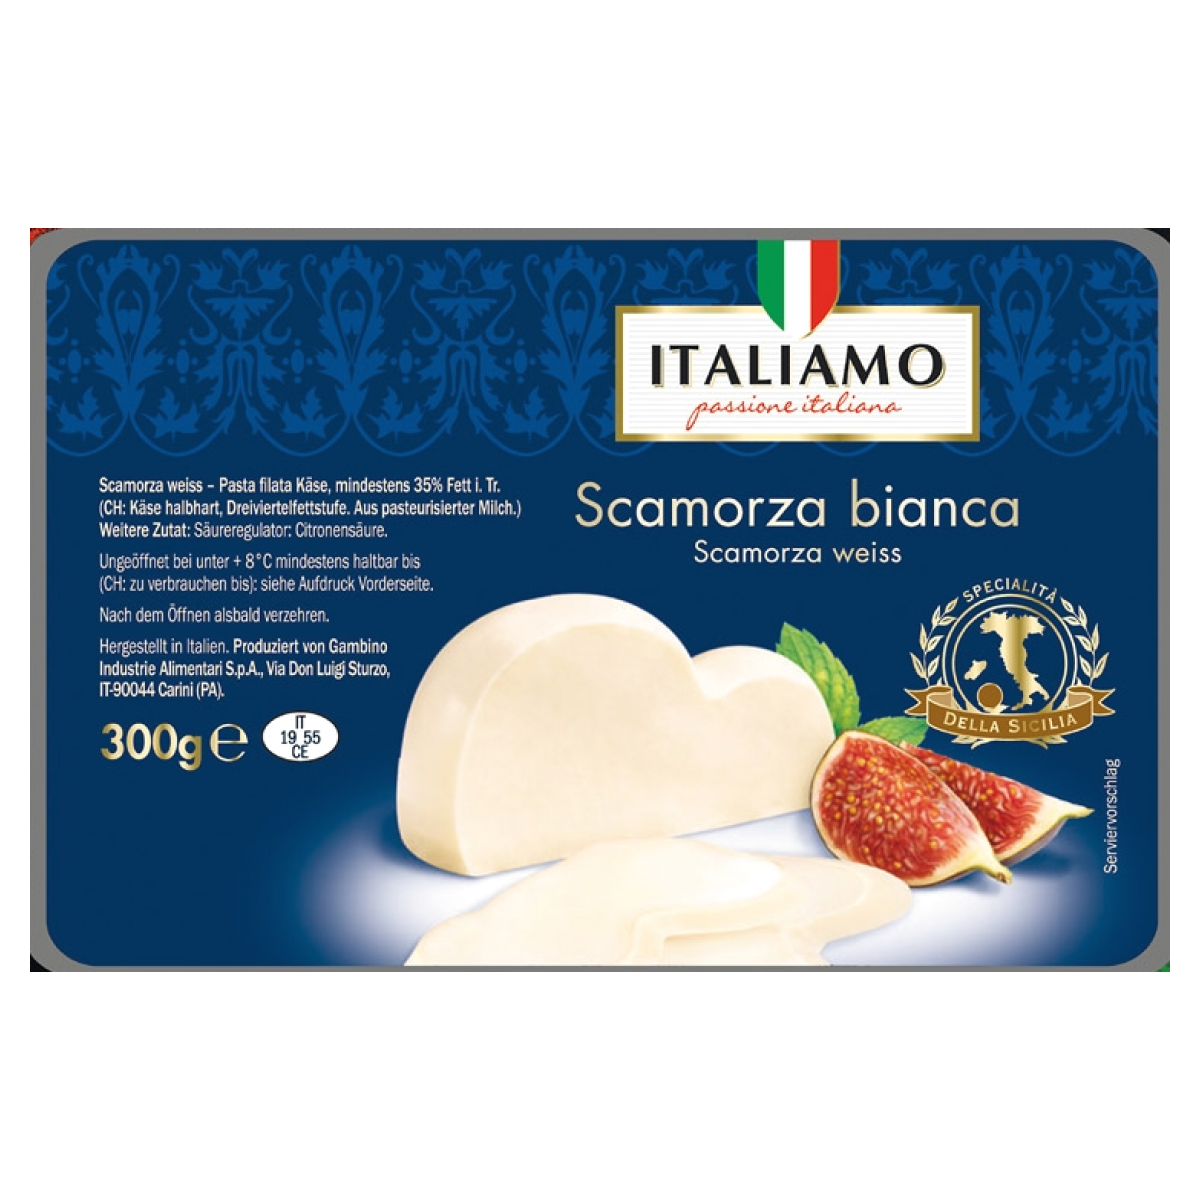 Sýr Scamorza Italiamo levně akci v